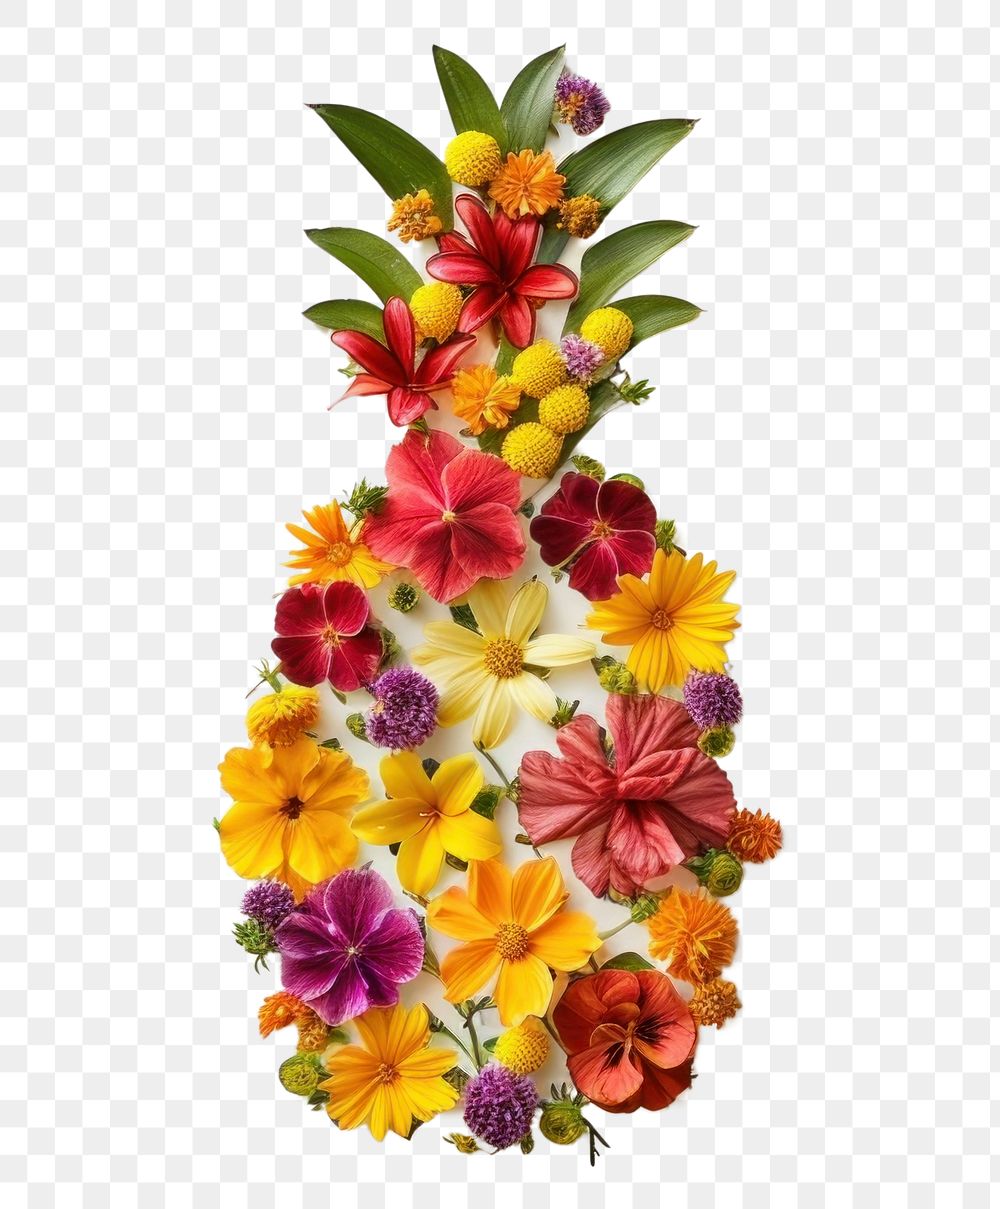 PNG Flat flower pineapple silhouette shape nature plant petal.